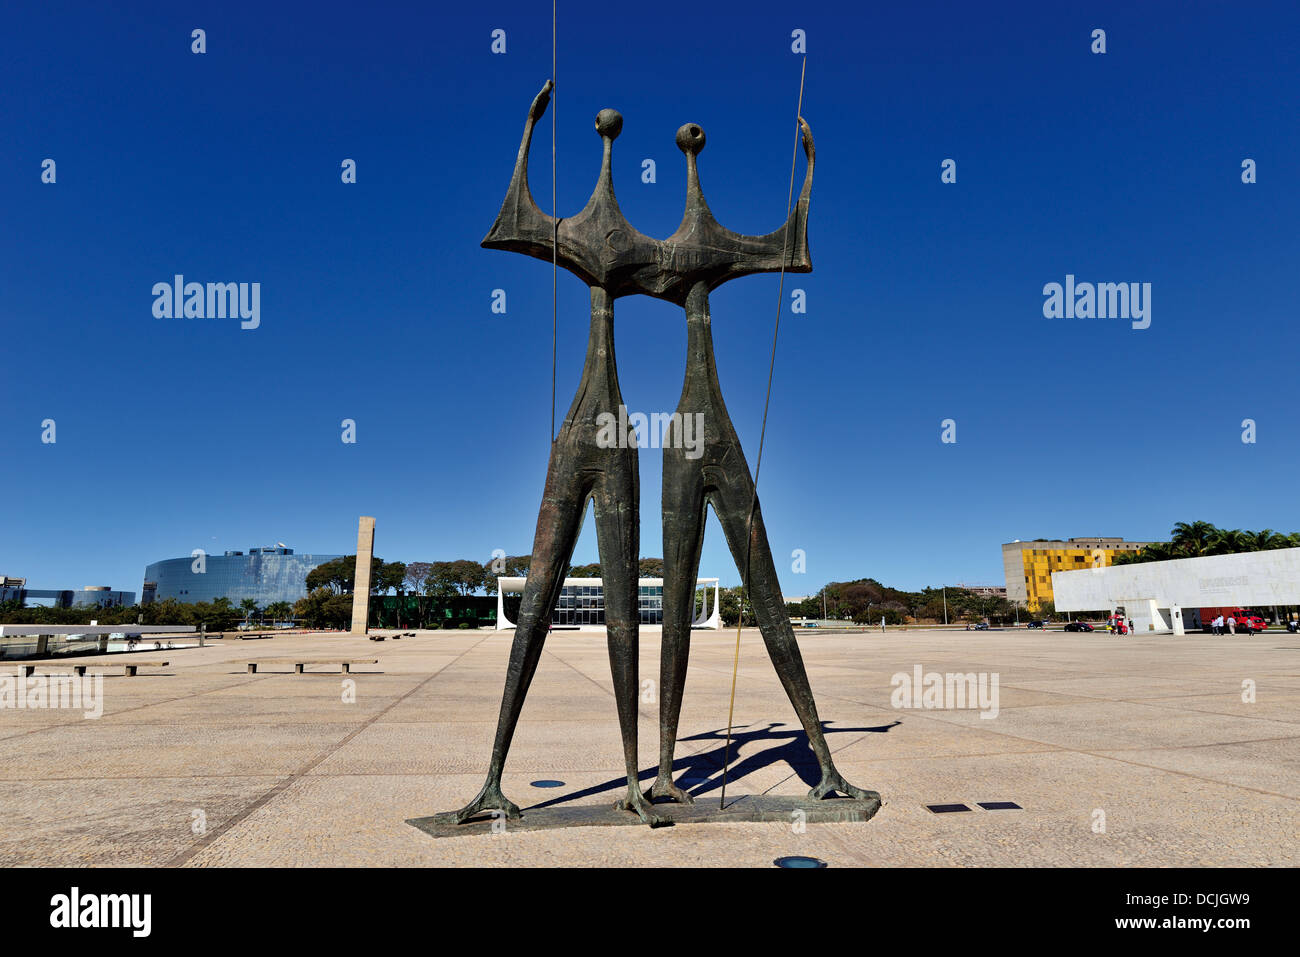 Brazil, Brasilia: Statue 'Os Candangos' by Bruno Giorgi at the square Praca dos Tres Poderes Stock Photo